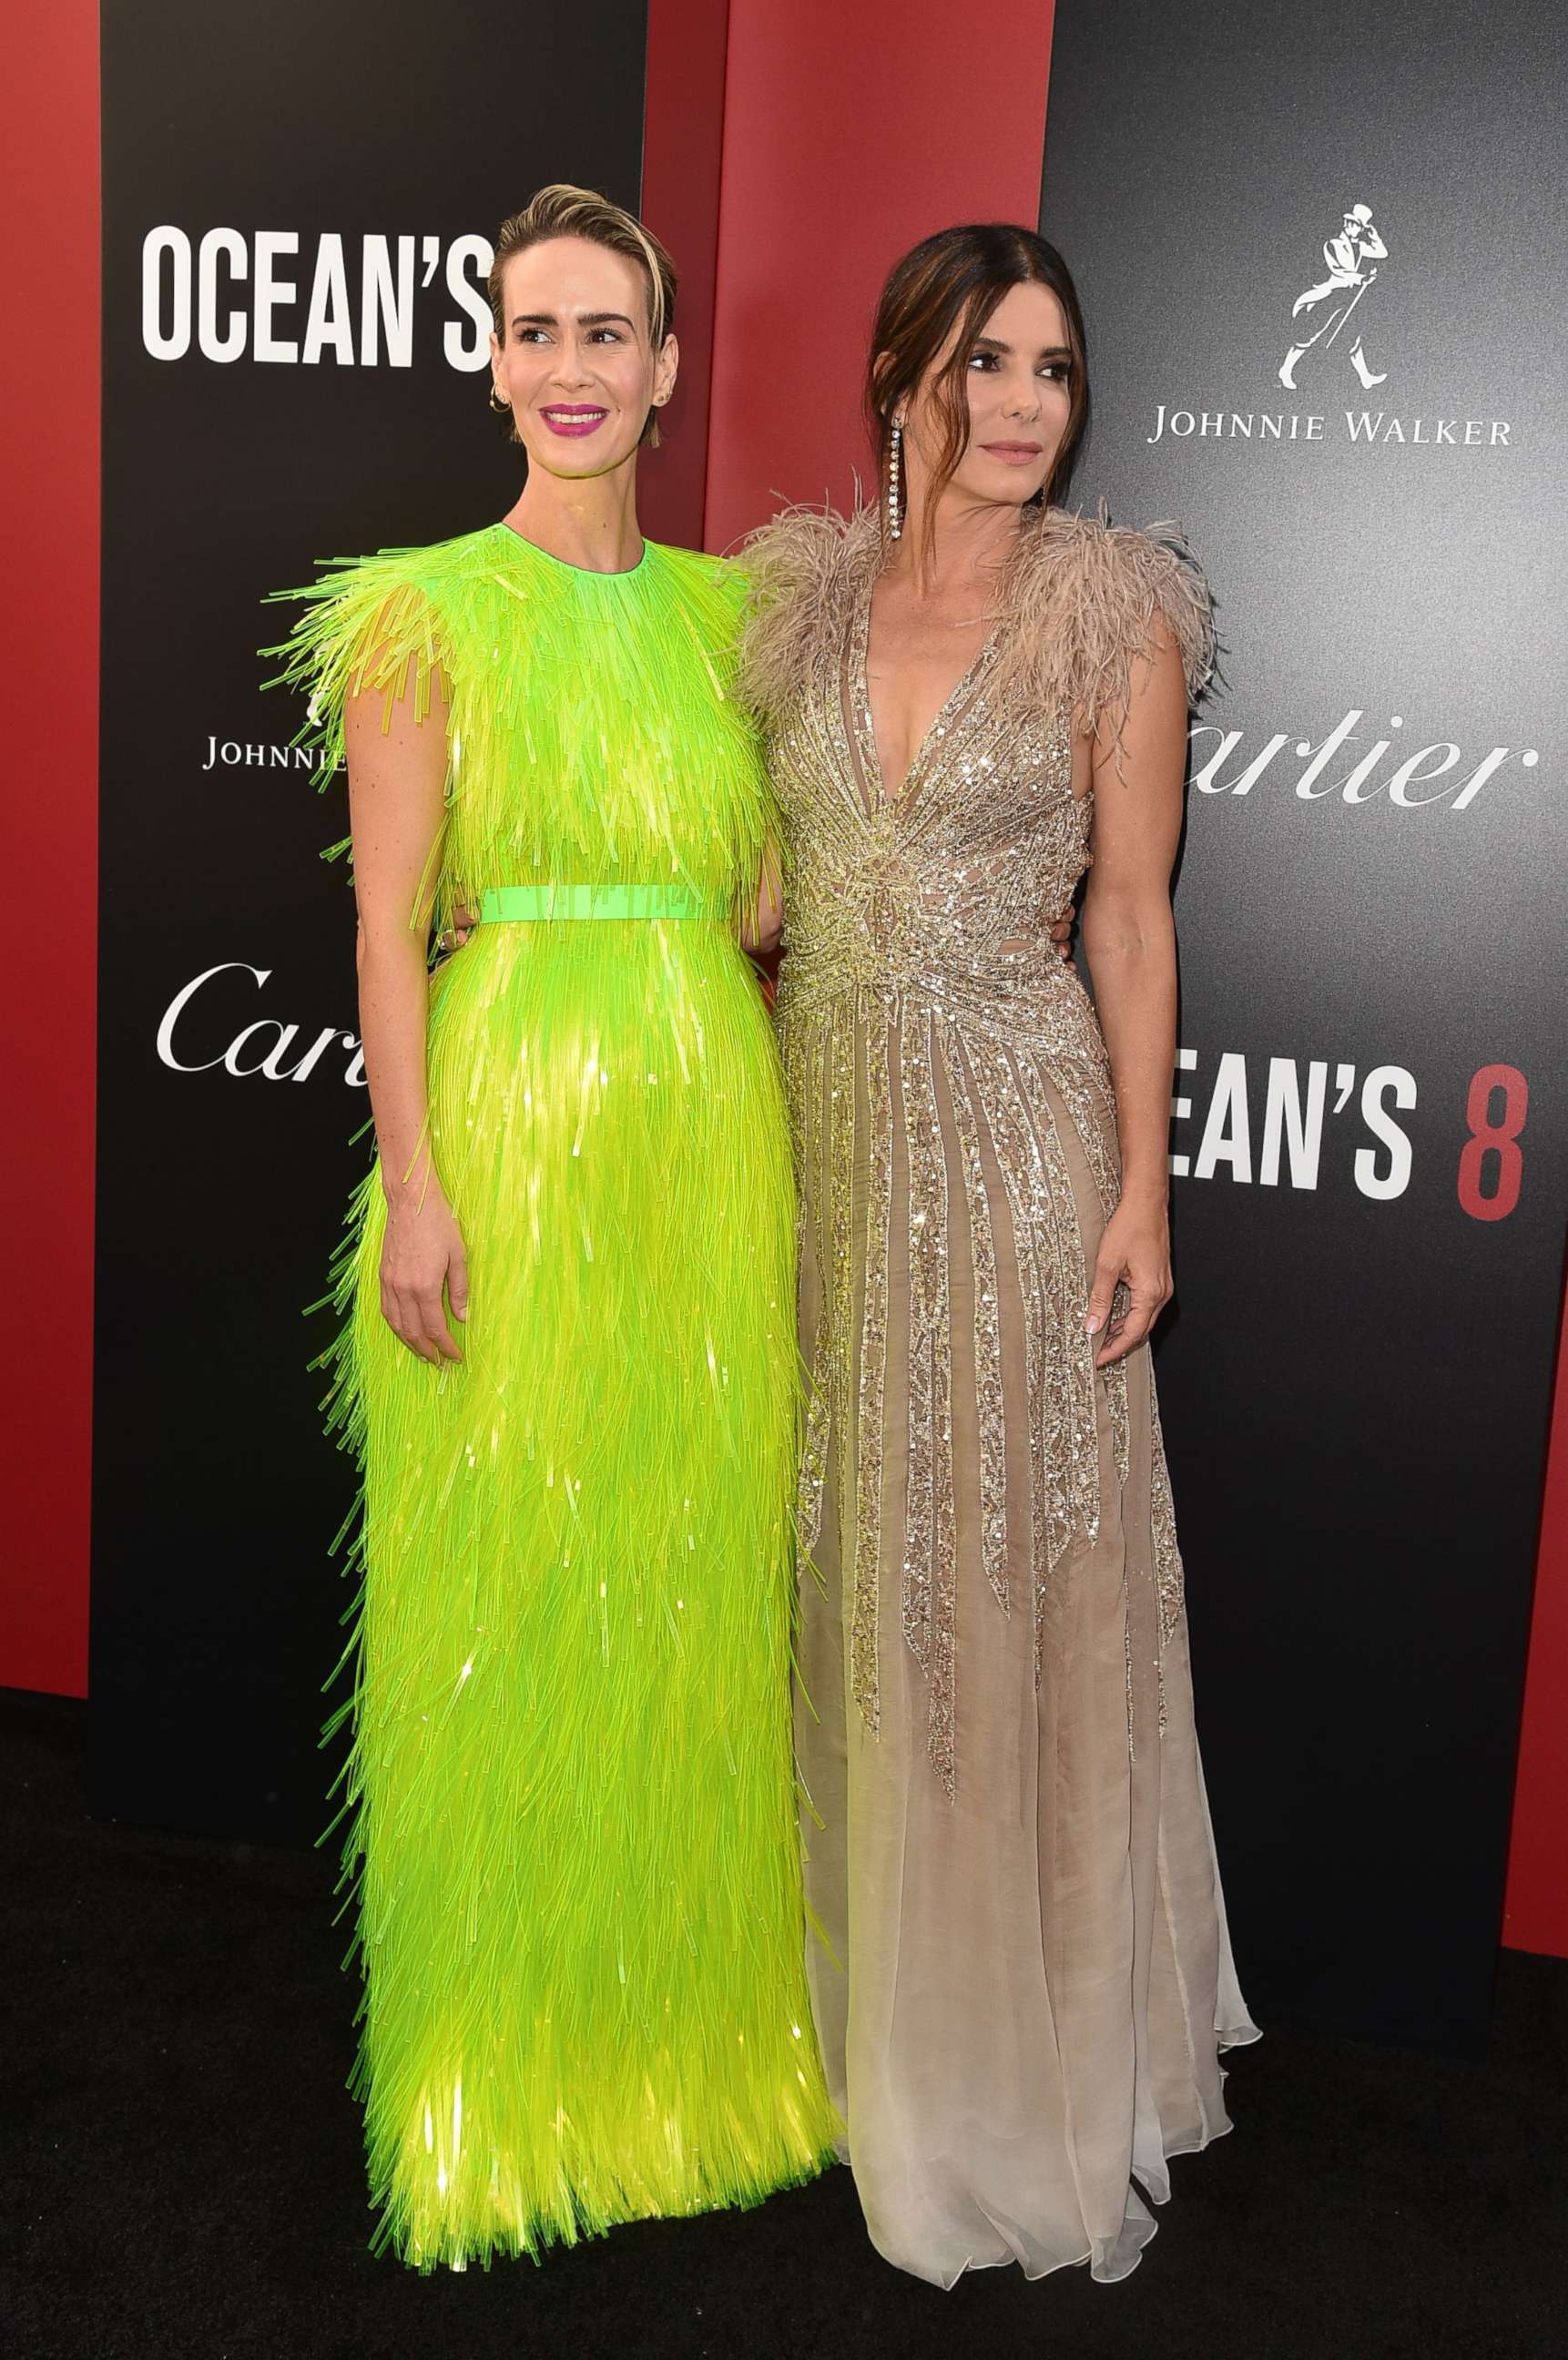 PHOTO: Sarah Paulson and Sandra Bullock arrive for the "Ocean's 8" premiere in New York, June 5, 2018.